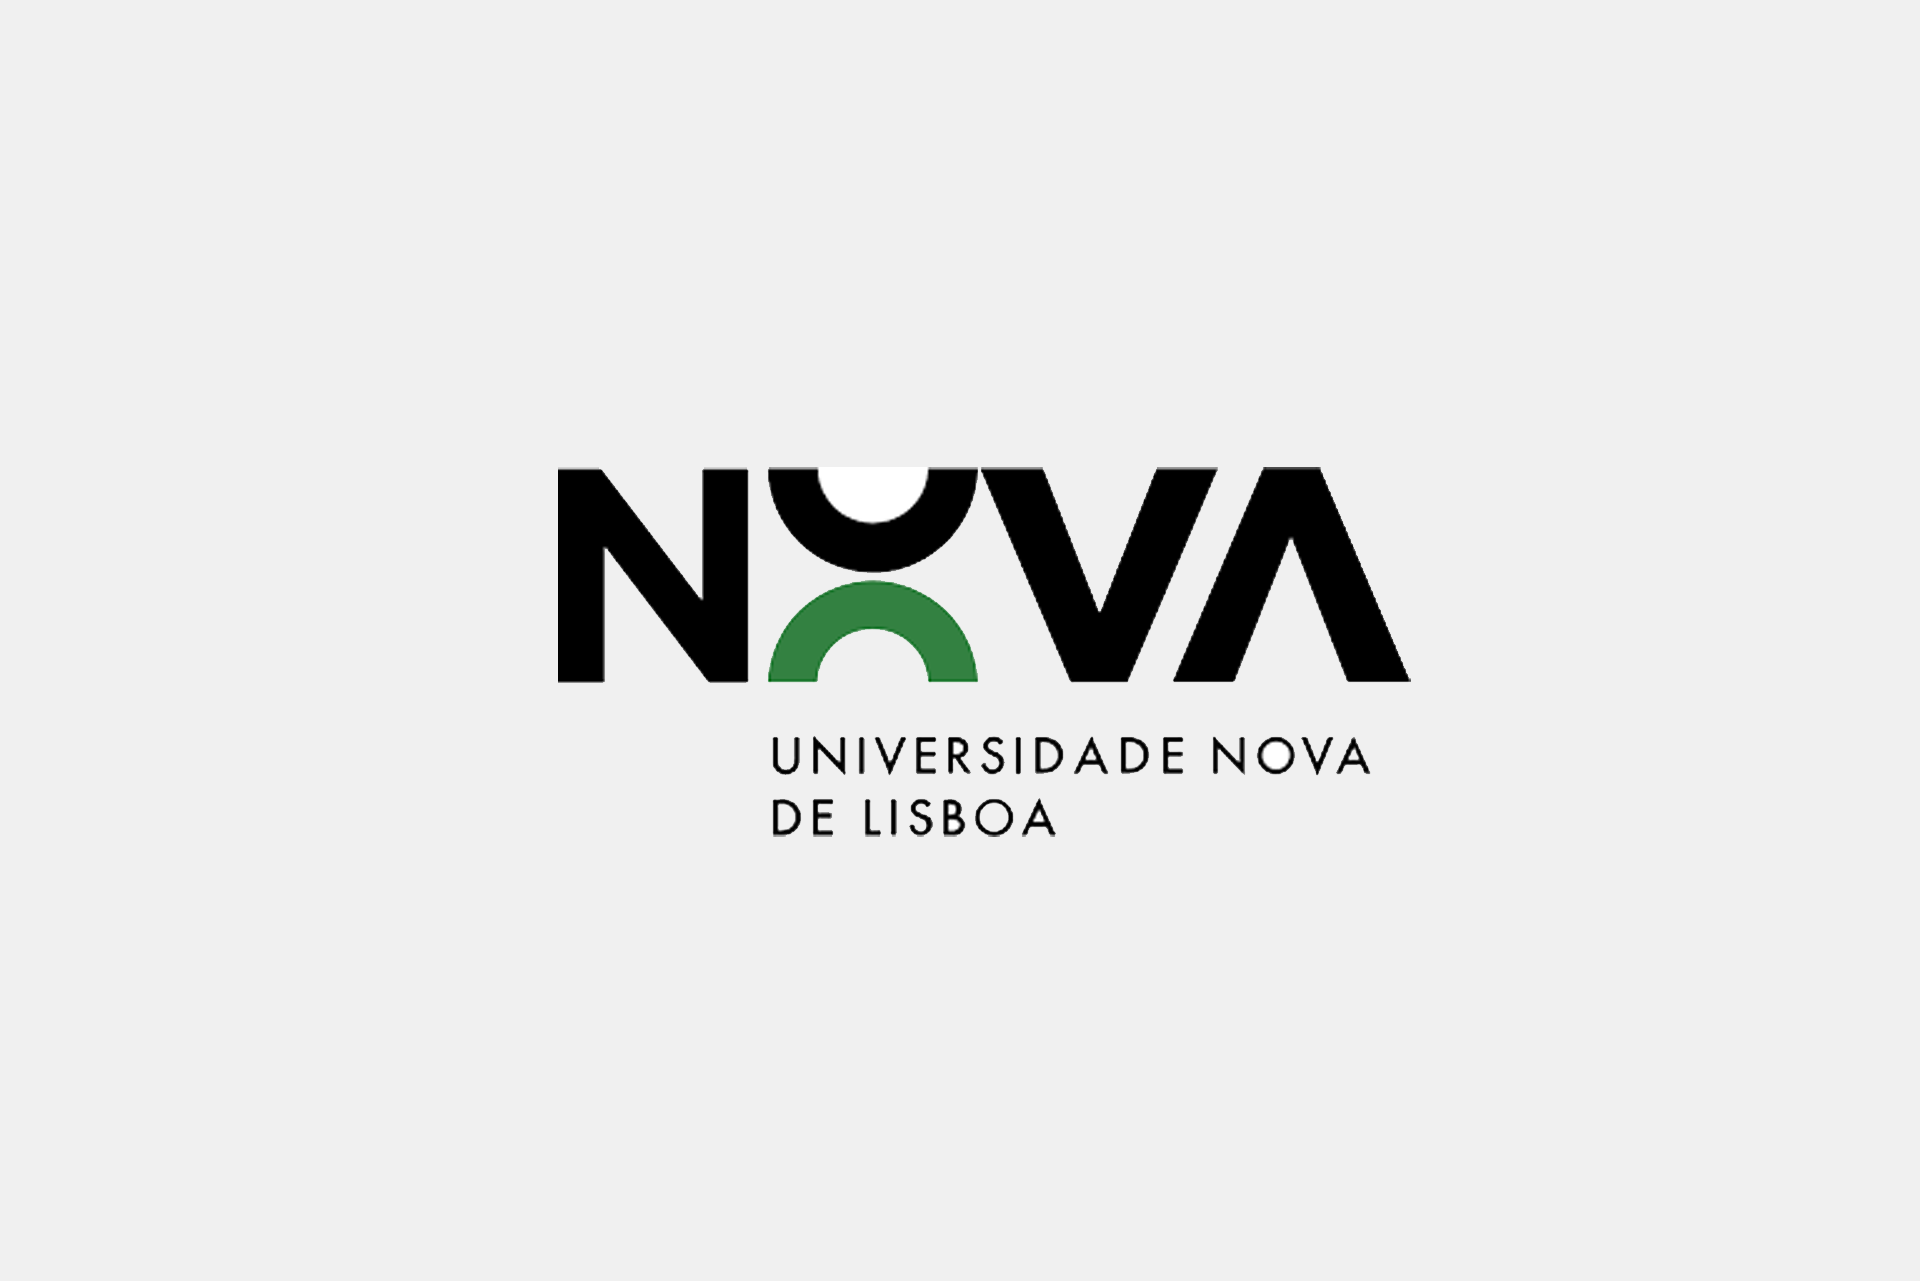 UNIVERSIDADE NOVA DE LISBOA (Portugal)